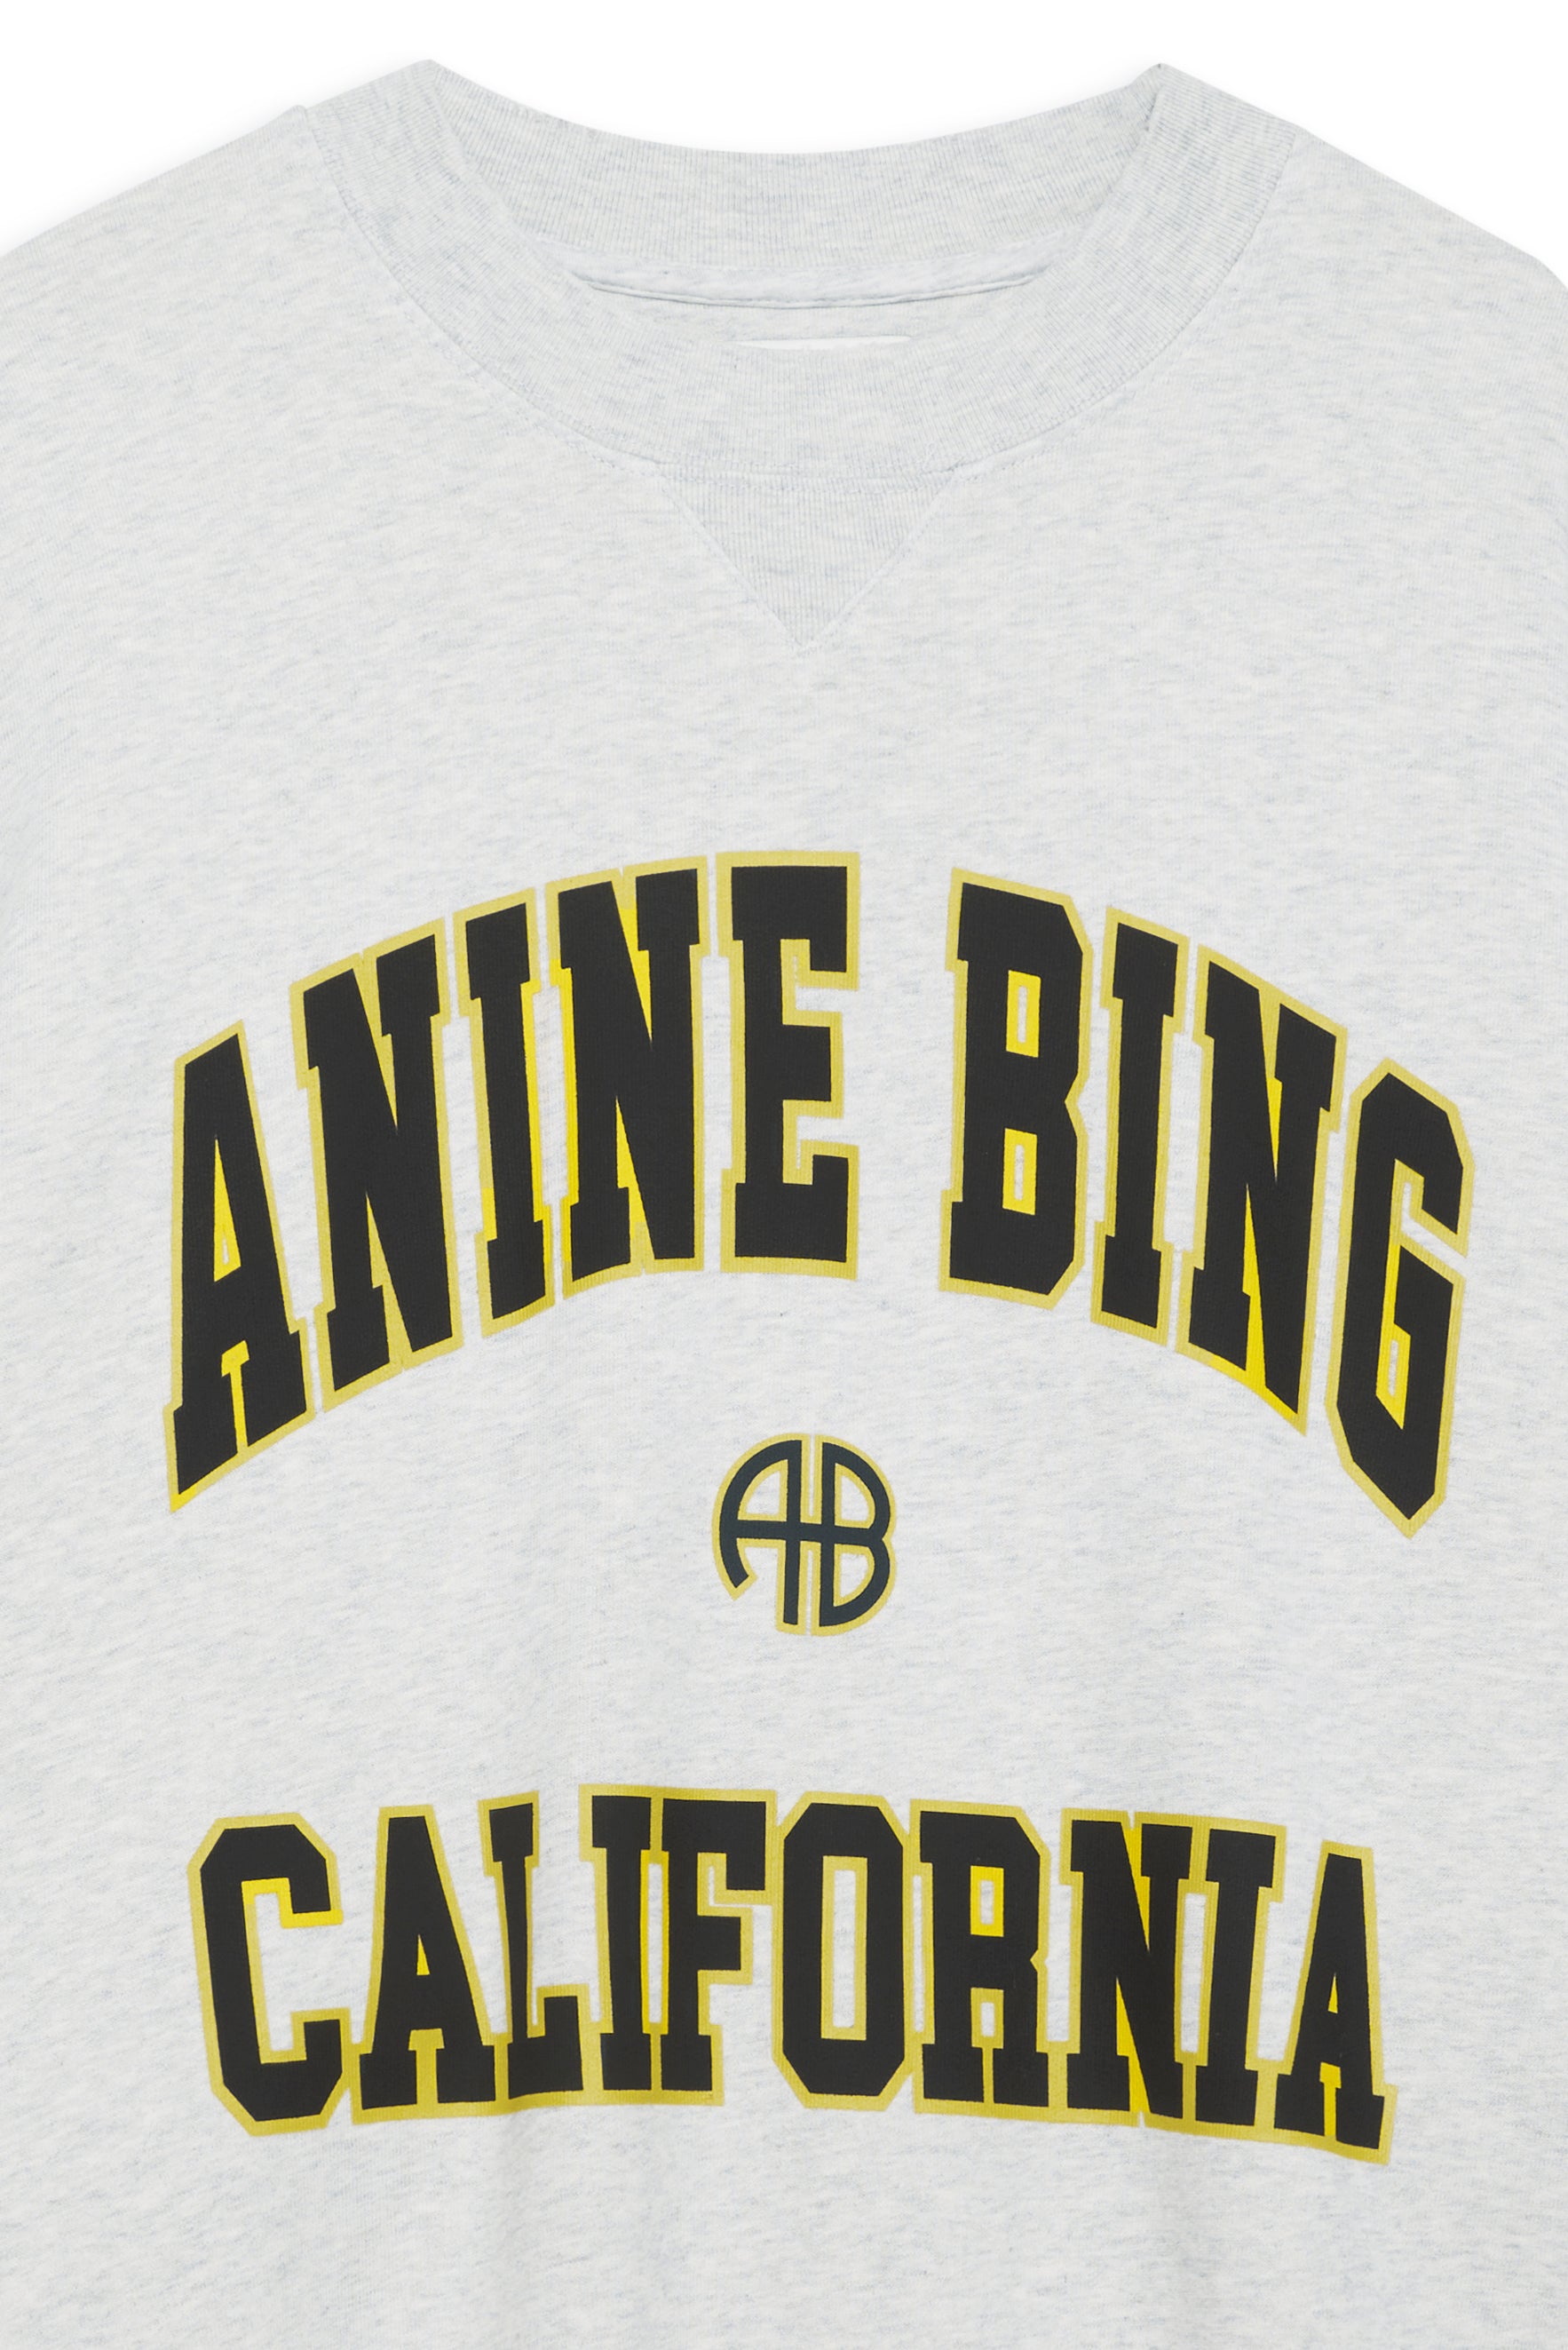 Anine Bing Jaci Sweatshirt AB California in Grey Melange available at TNT The New Trend Australia.